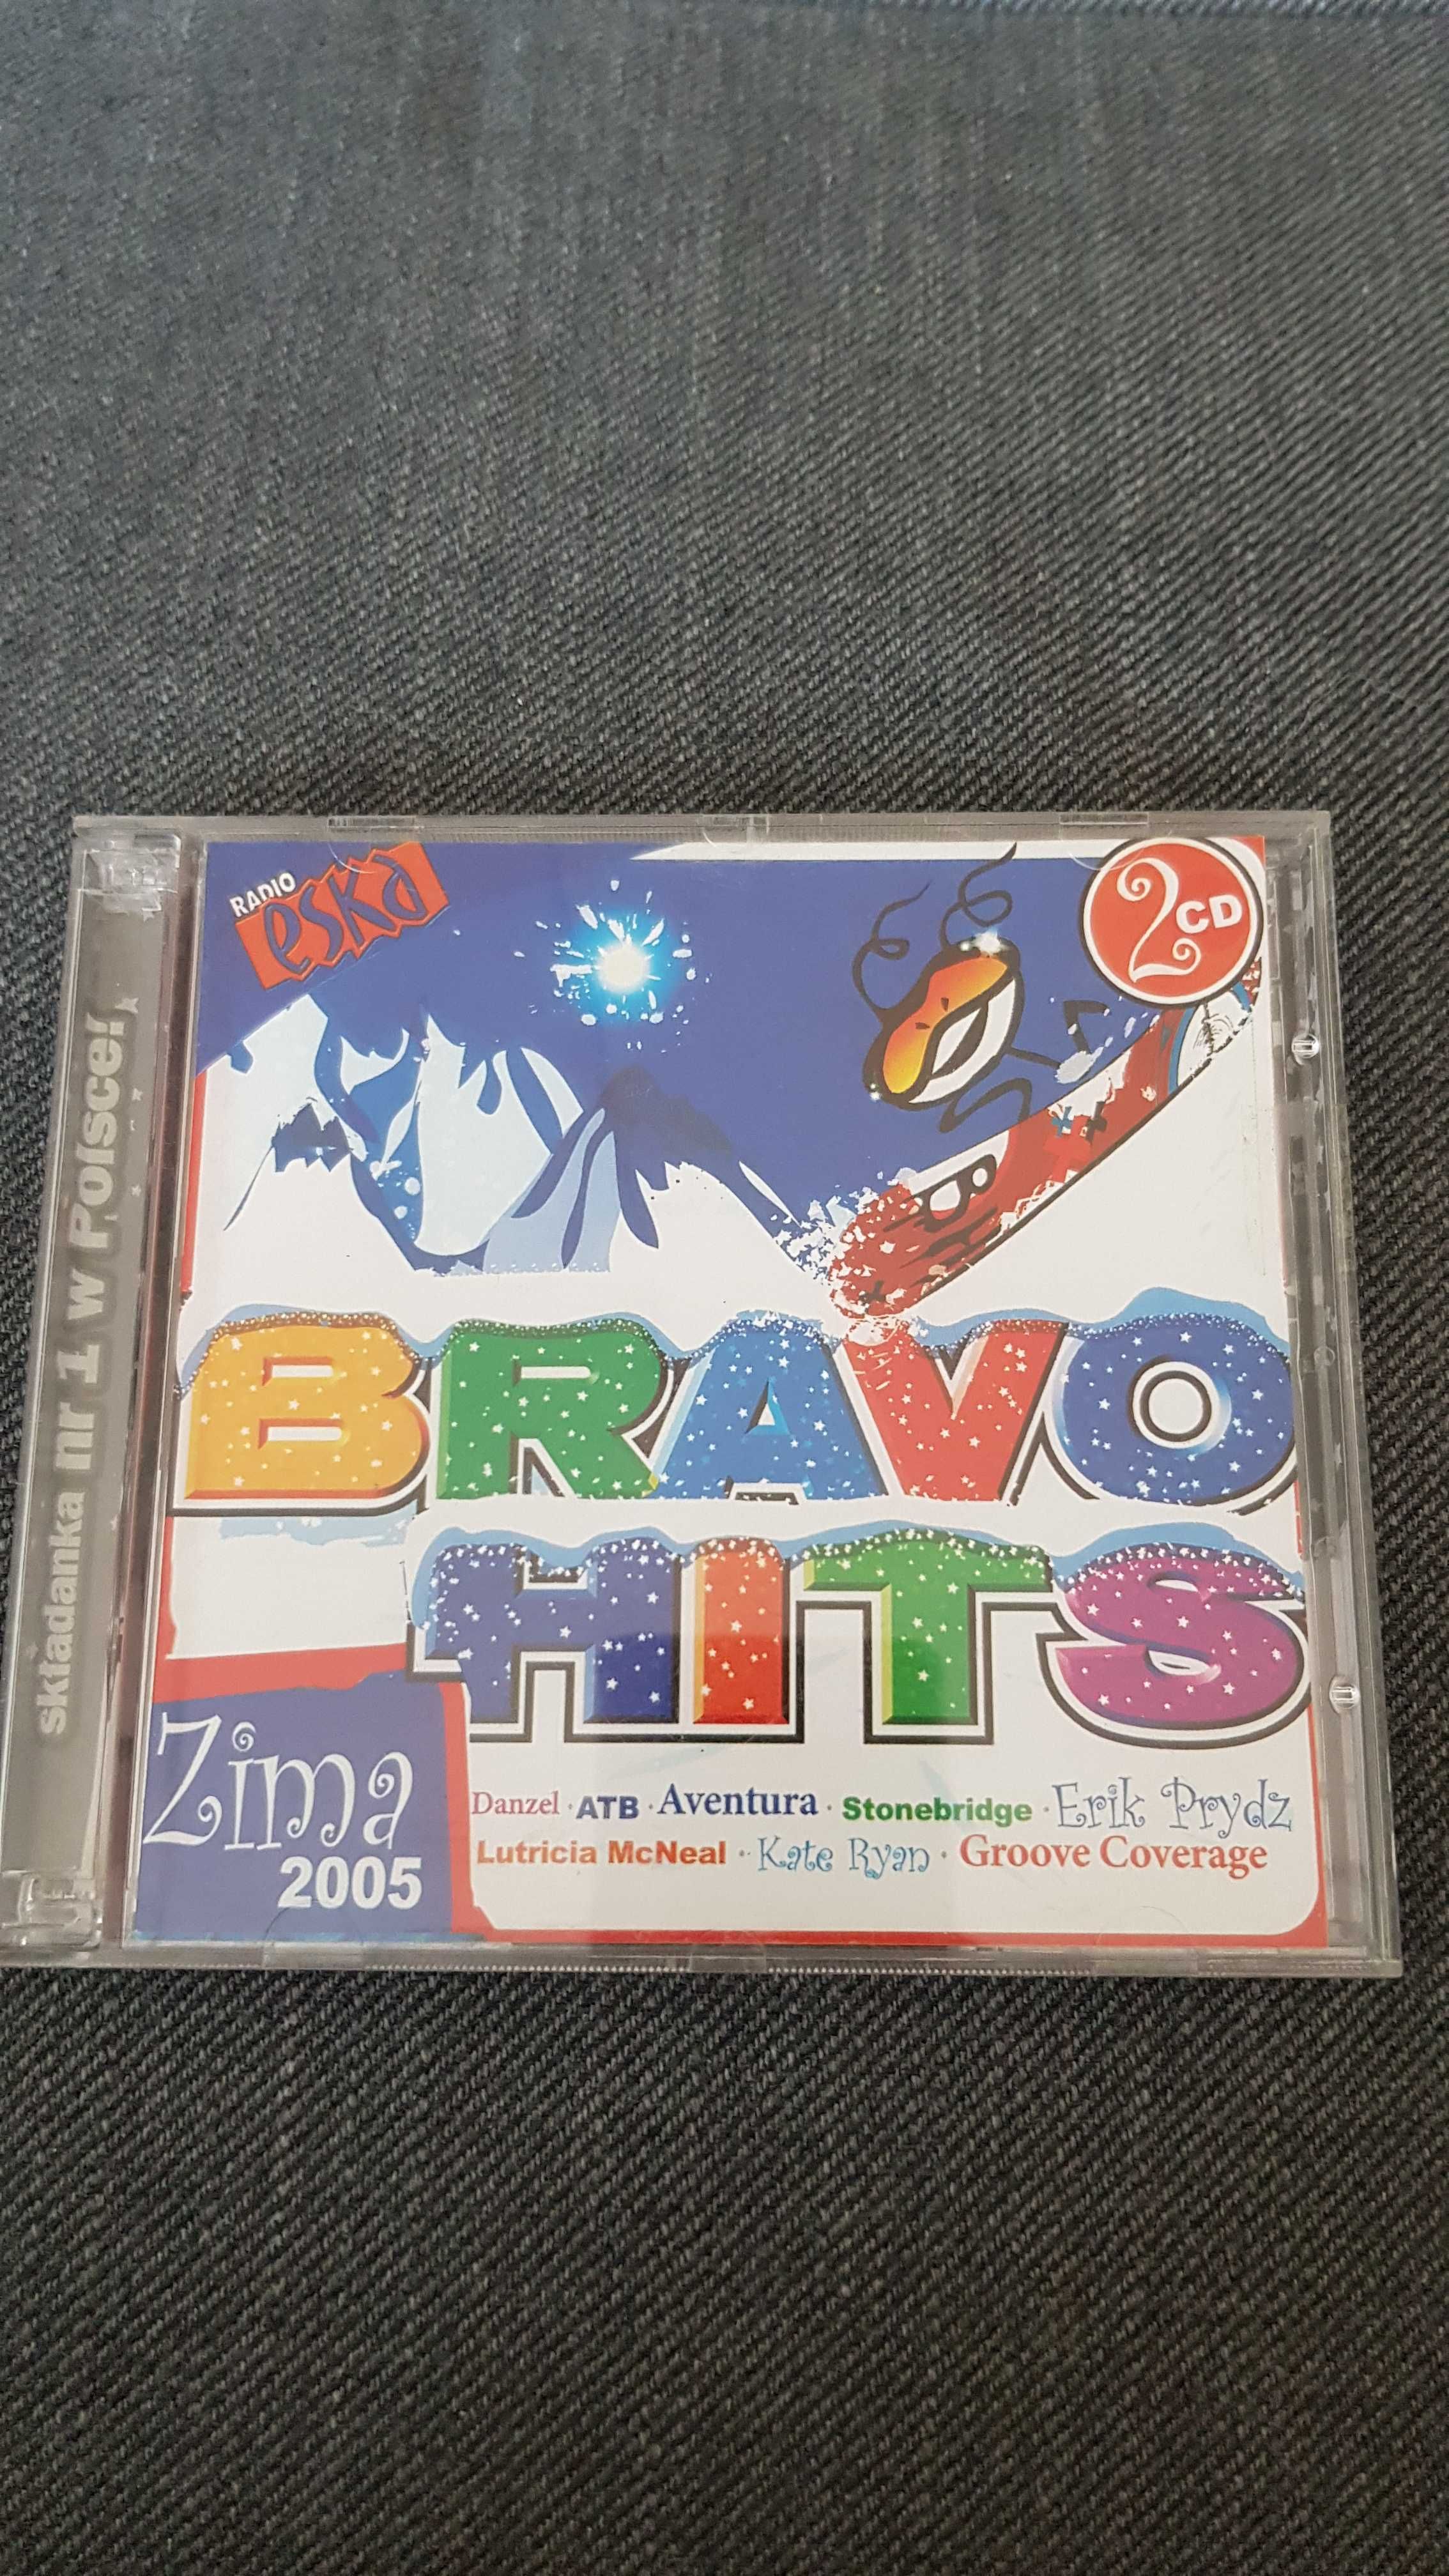 płyty CD bravo hits